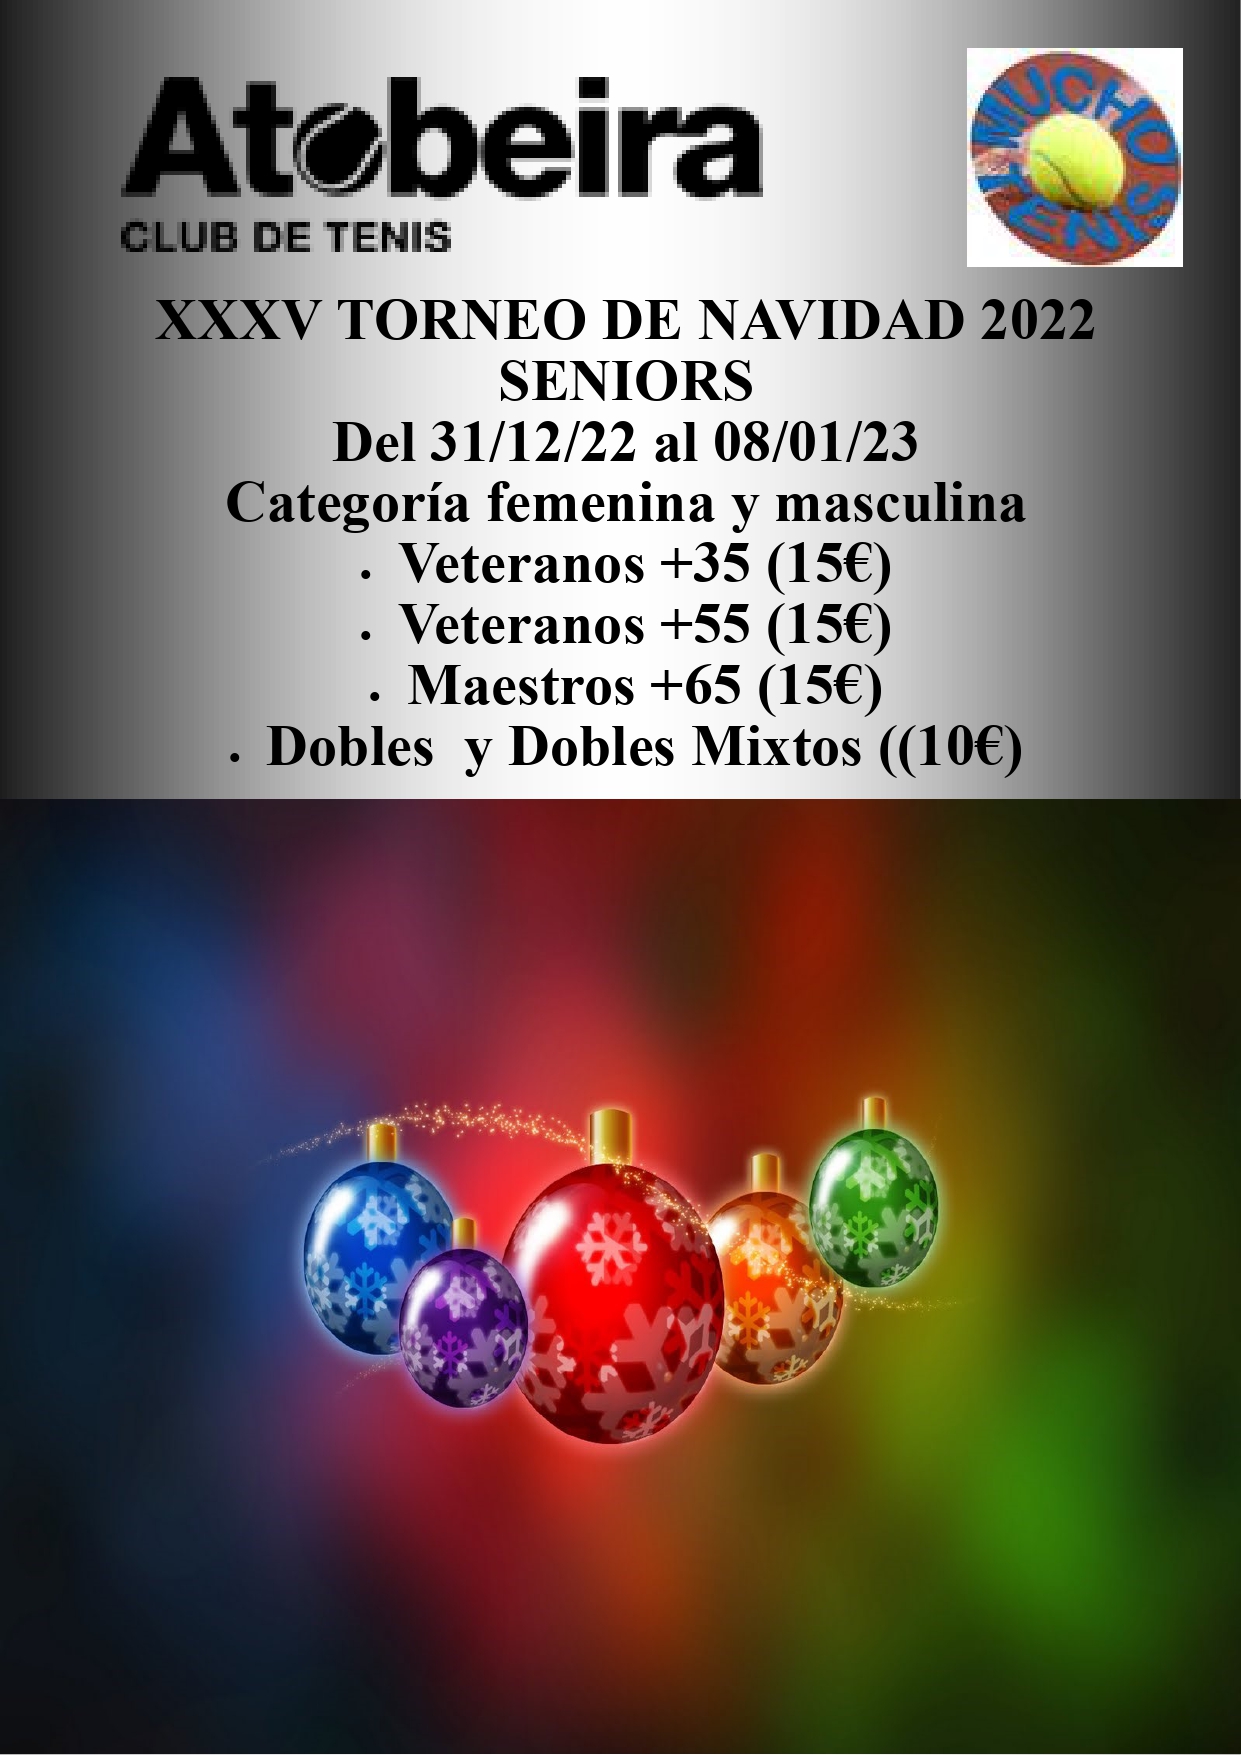 cartel XXXV Torneo de Navidad Senior A Tobeira 2022